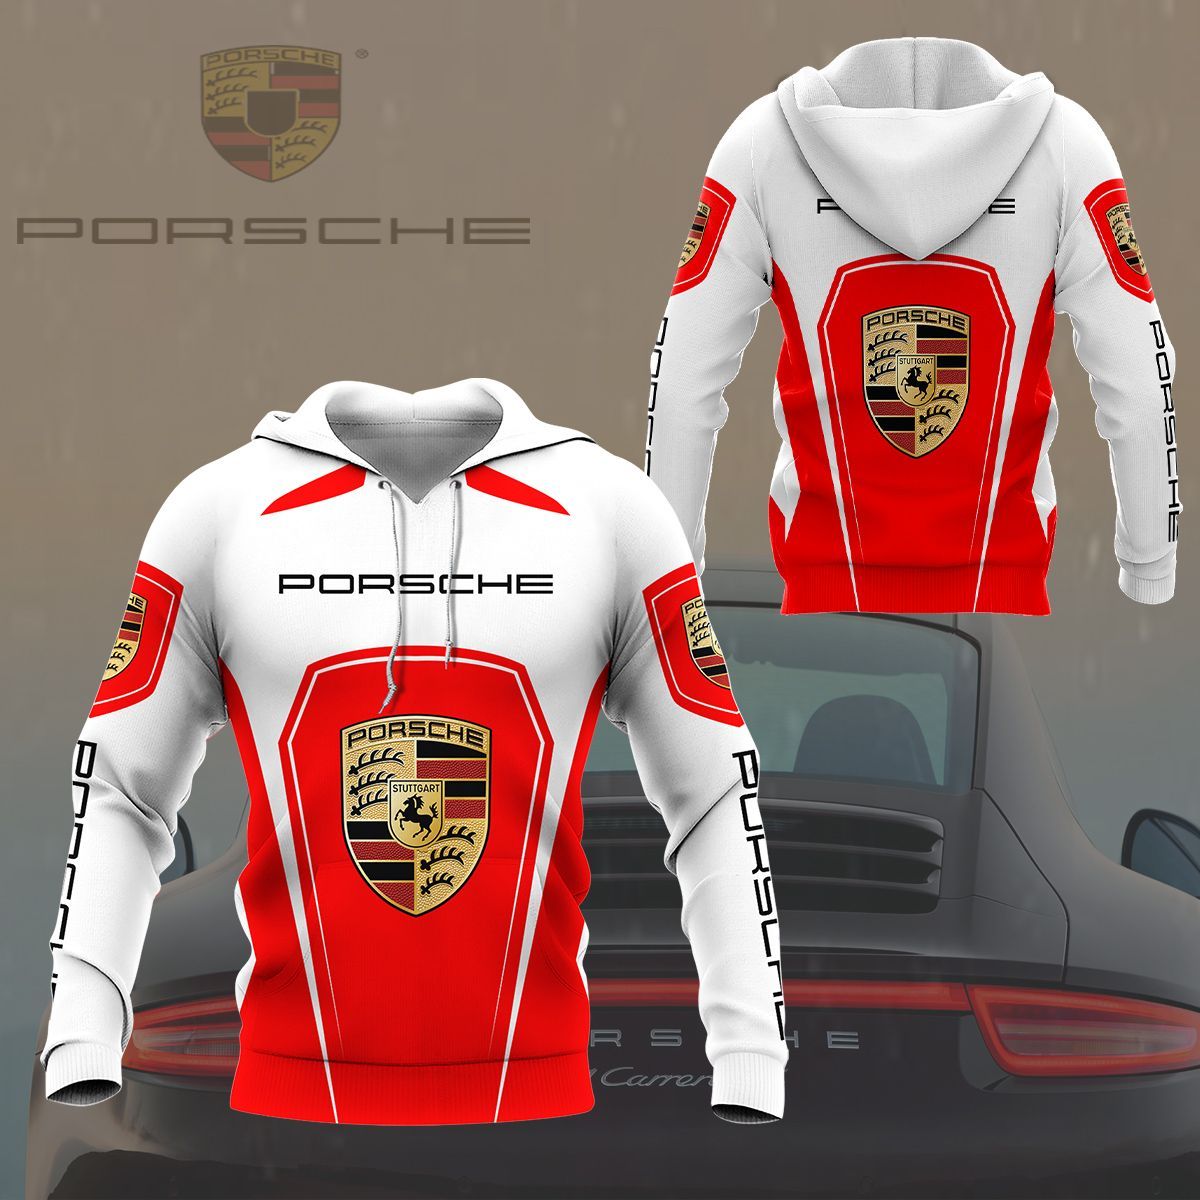 3D All Over Printed Porsche Tnt-Hl Shirts Ver 1 (Red) – Wildzill Store